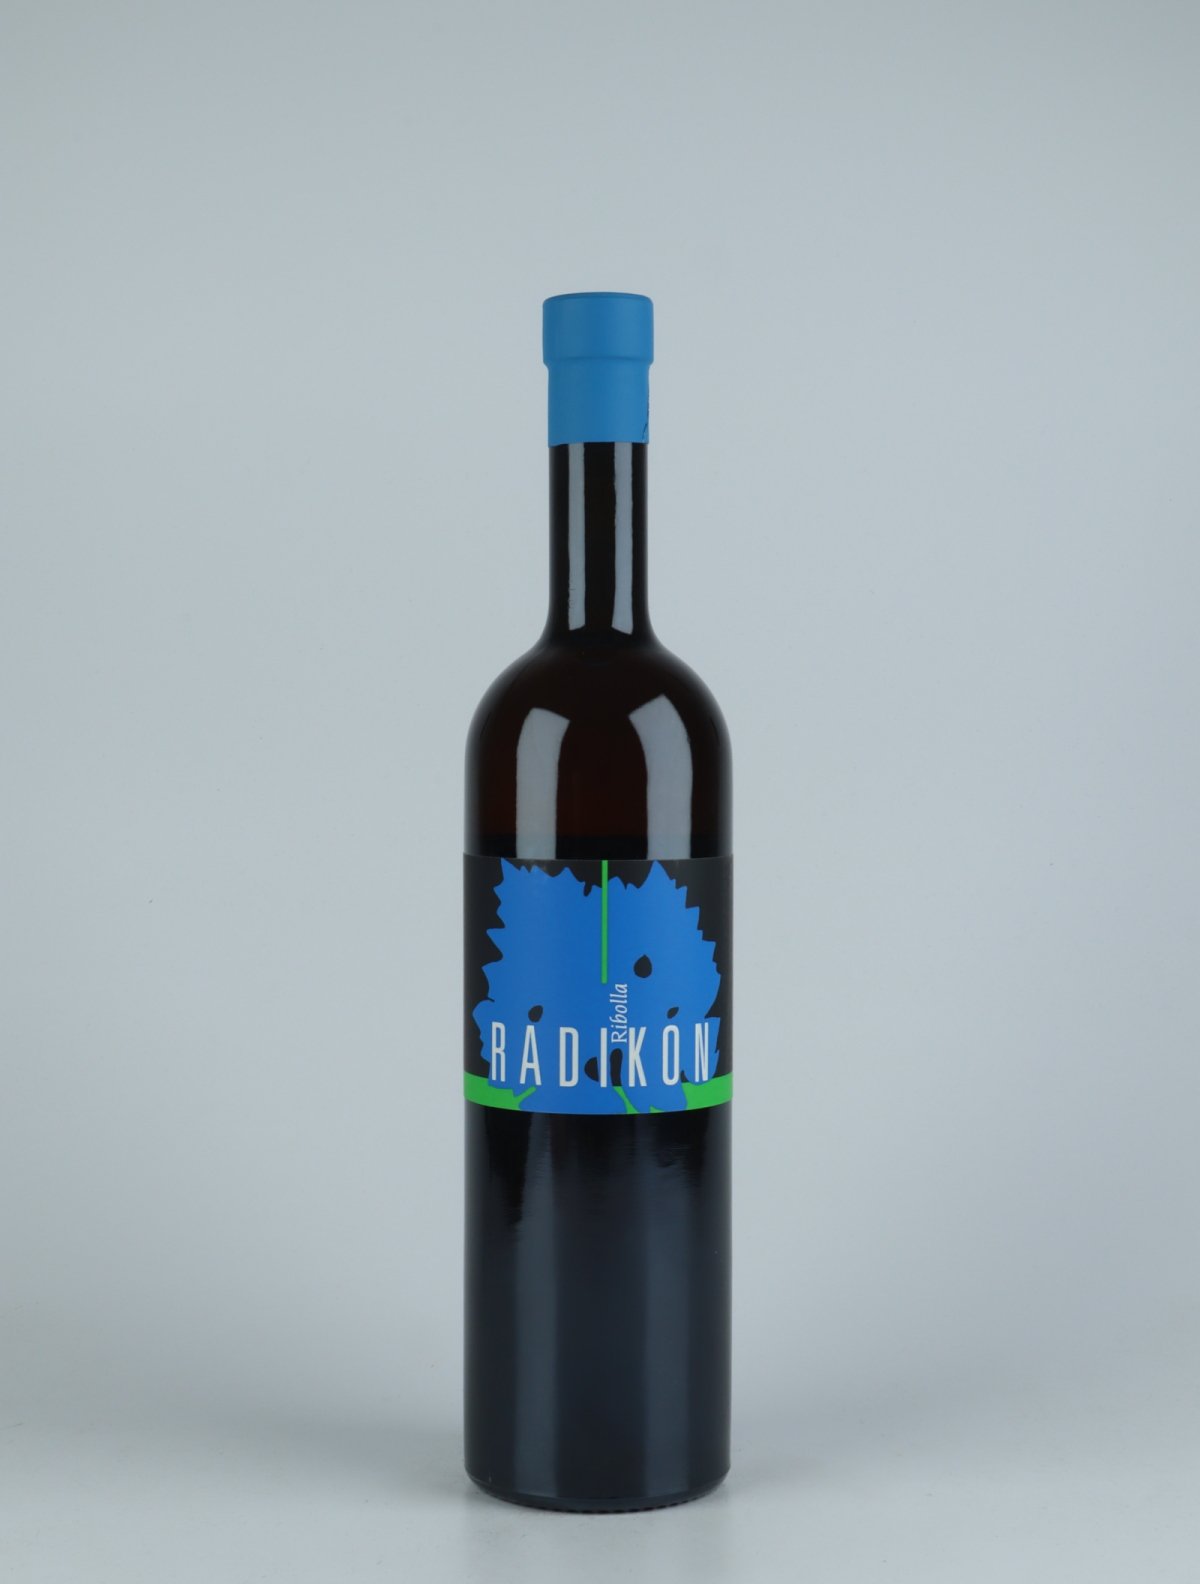 A bottle 2016 Ribolla Orange wine from Radikon, Friuli in Italy